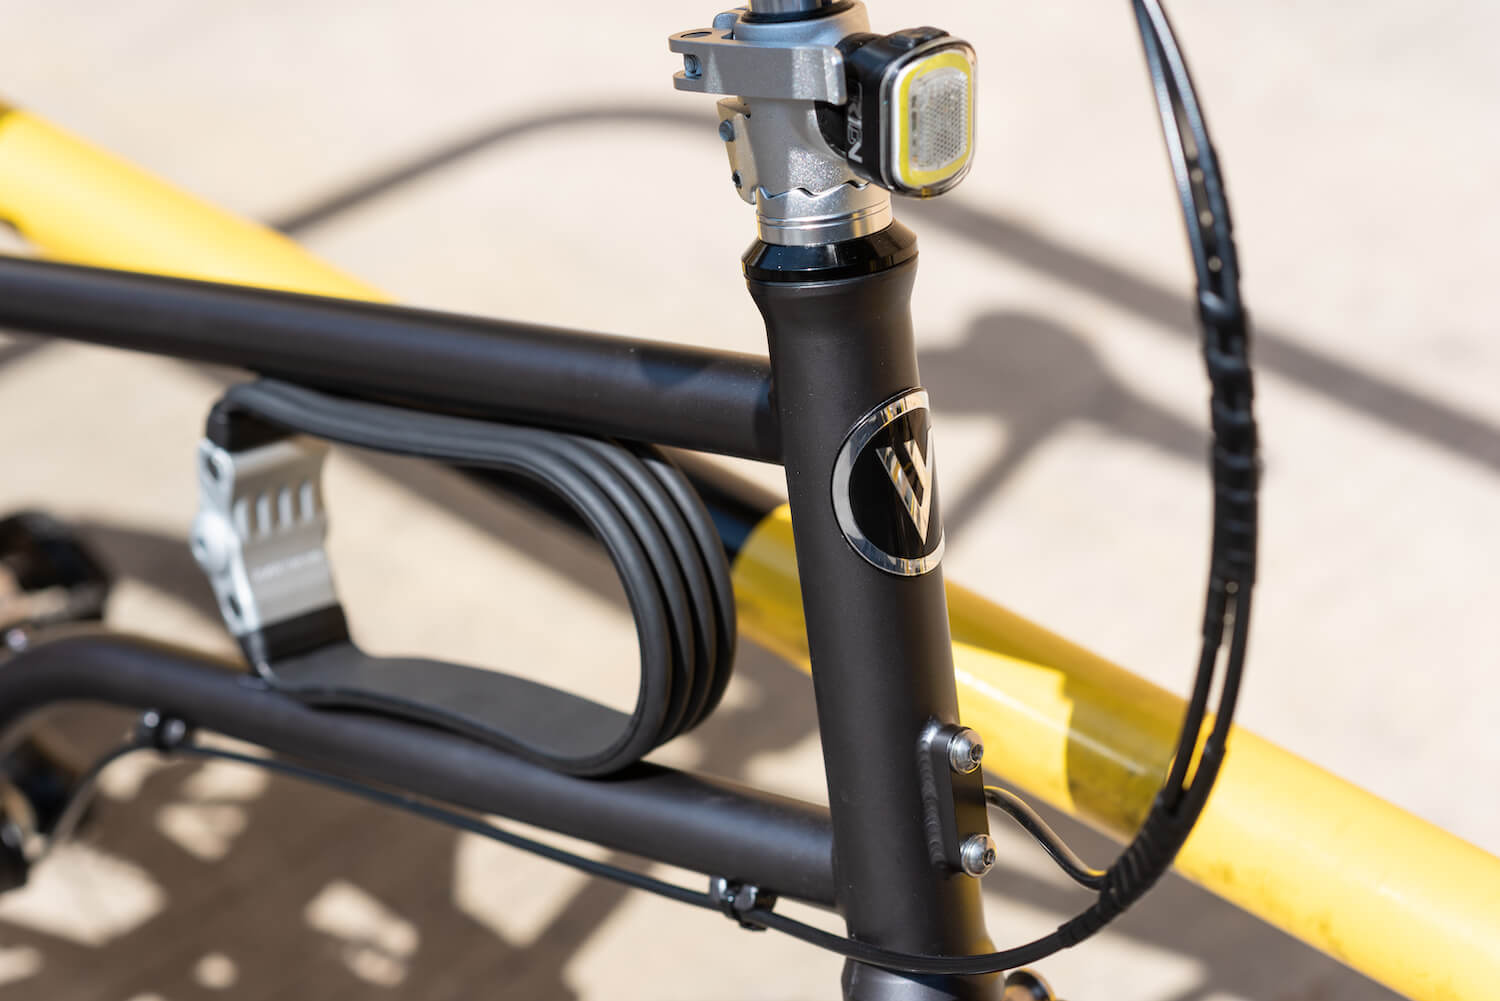 Lite Lock Flexi U 52 - Bike Security Safety - Folding Bike Lock for portable bicycle